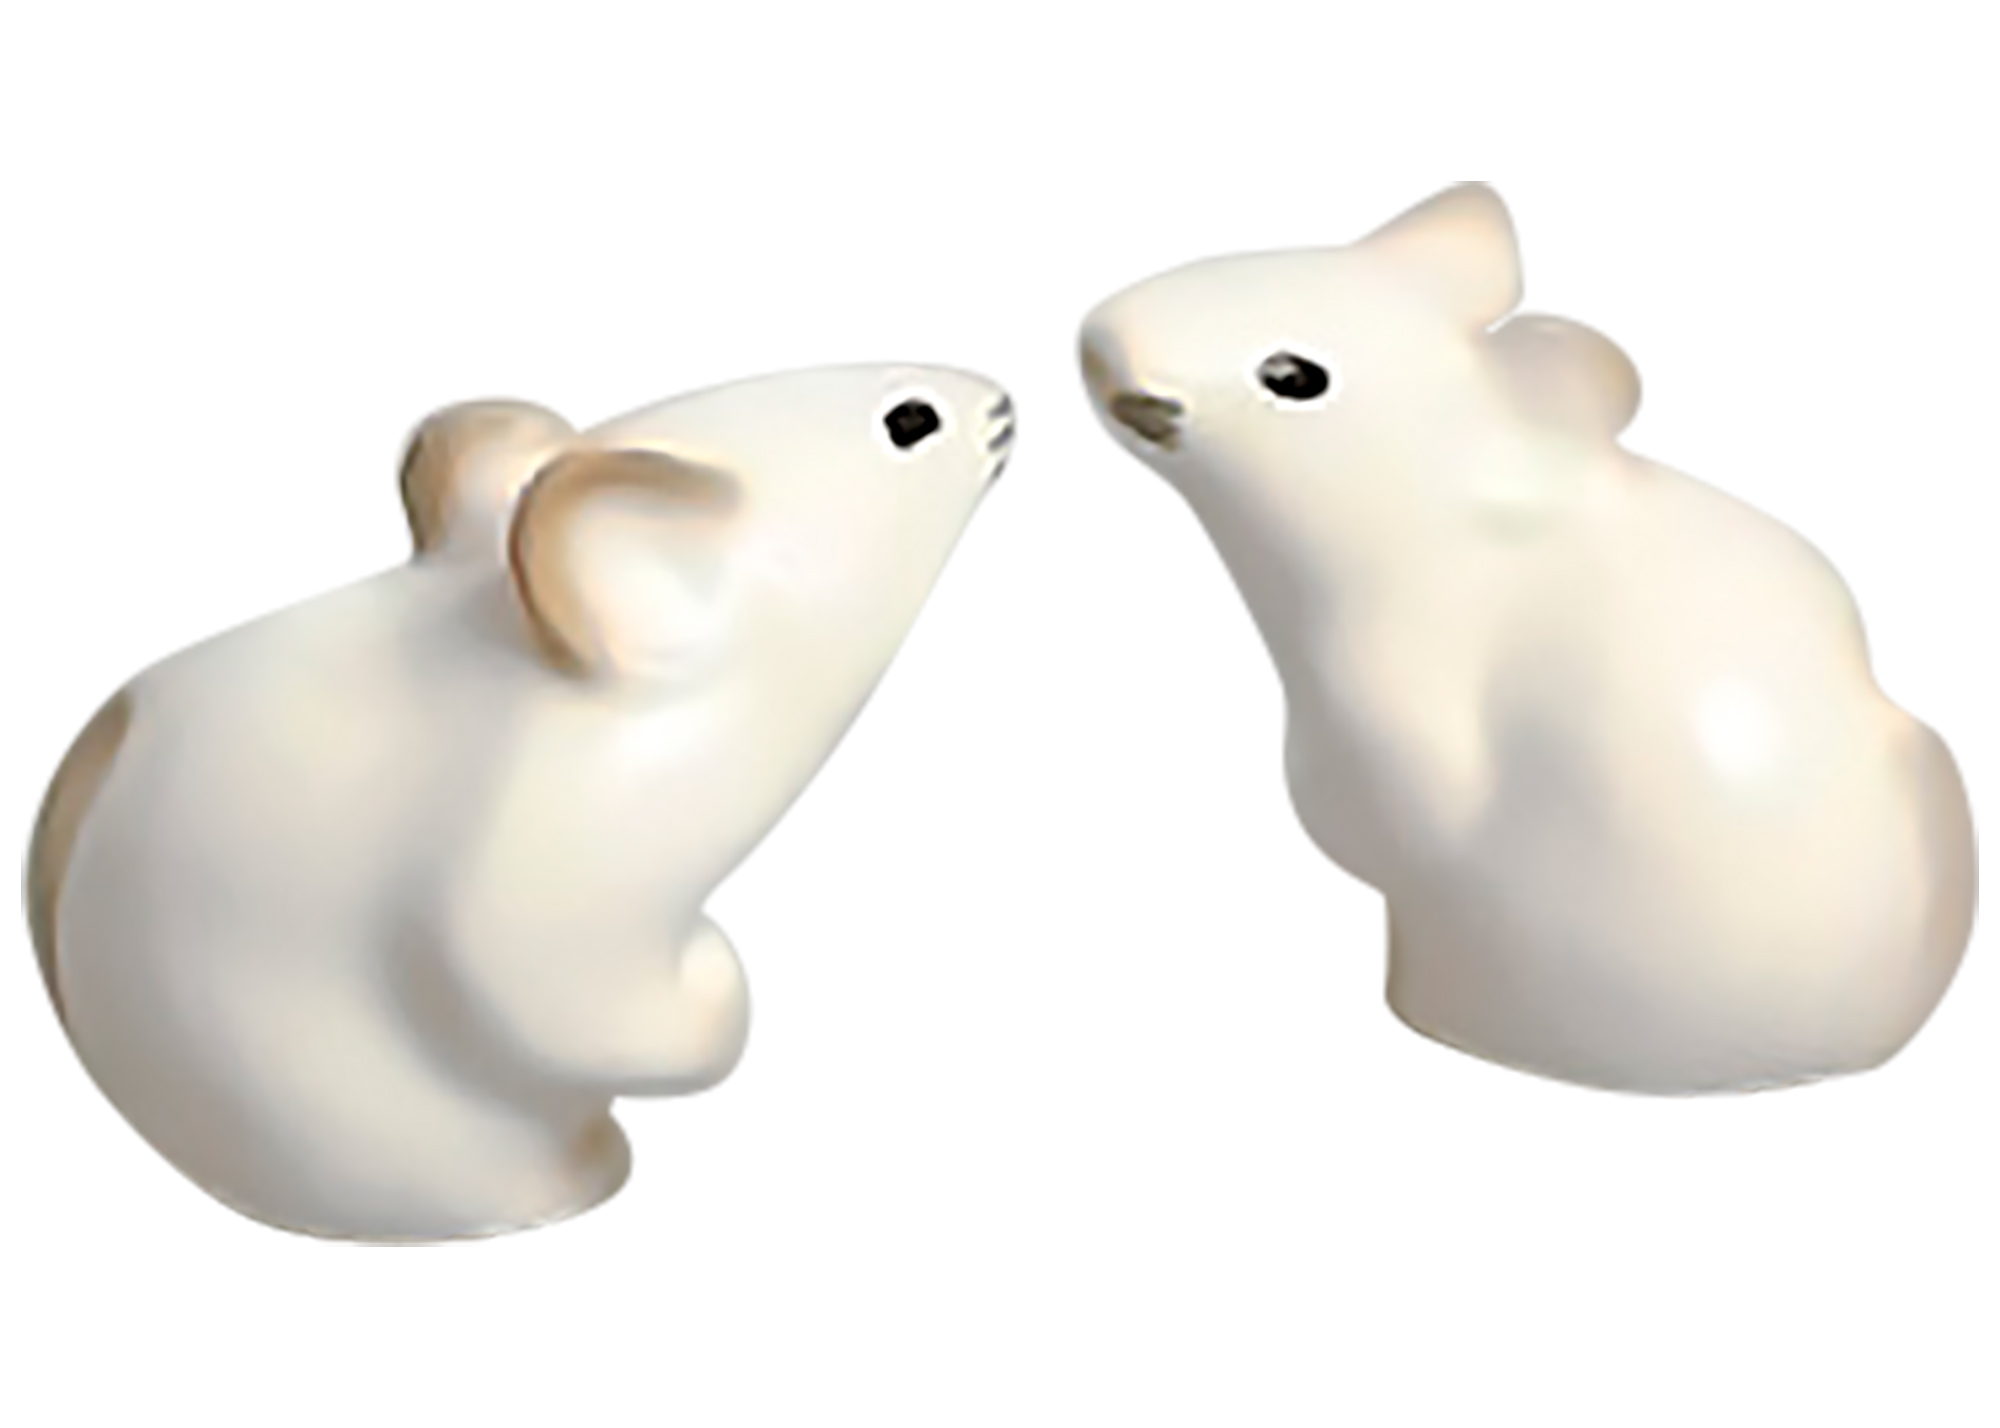 Buy Small White Mouse Figurine at GoldenCockerel.com